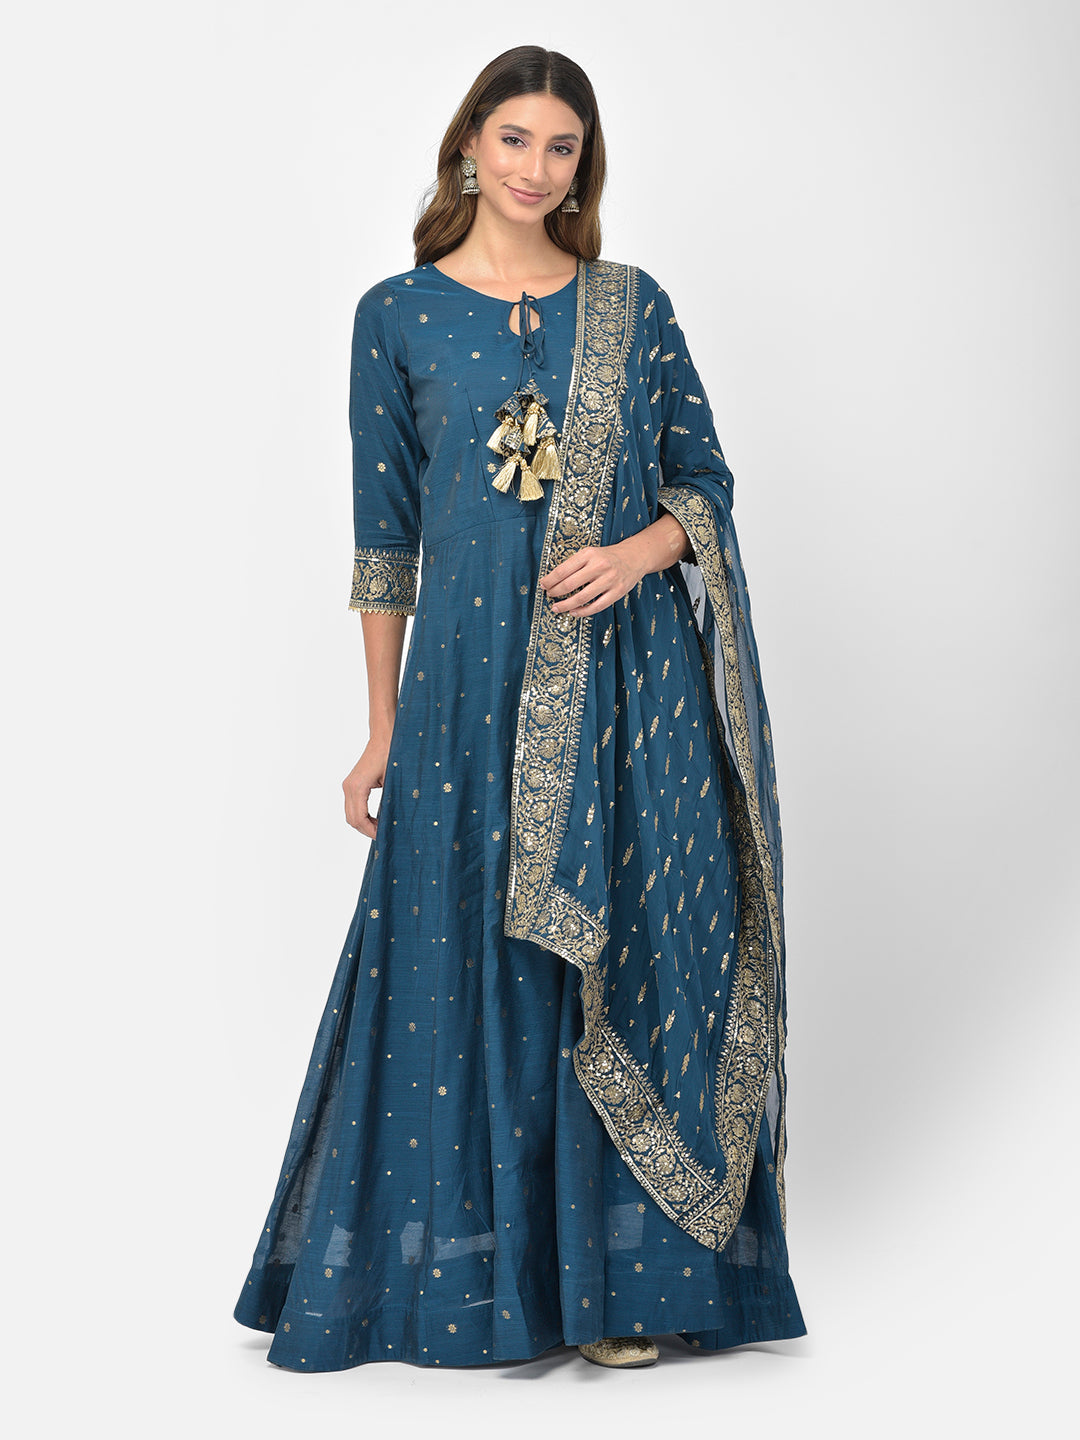 Neeru's peacock color chanderi fabric salwar kameez